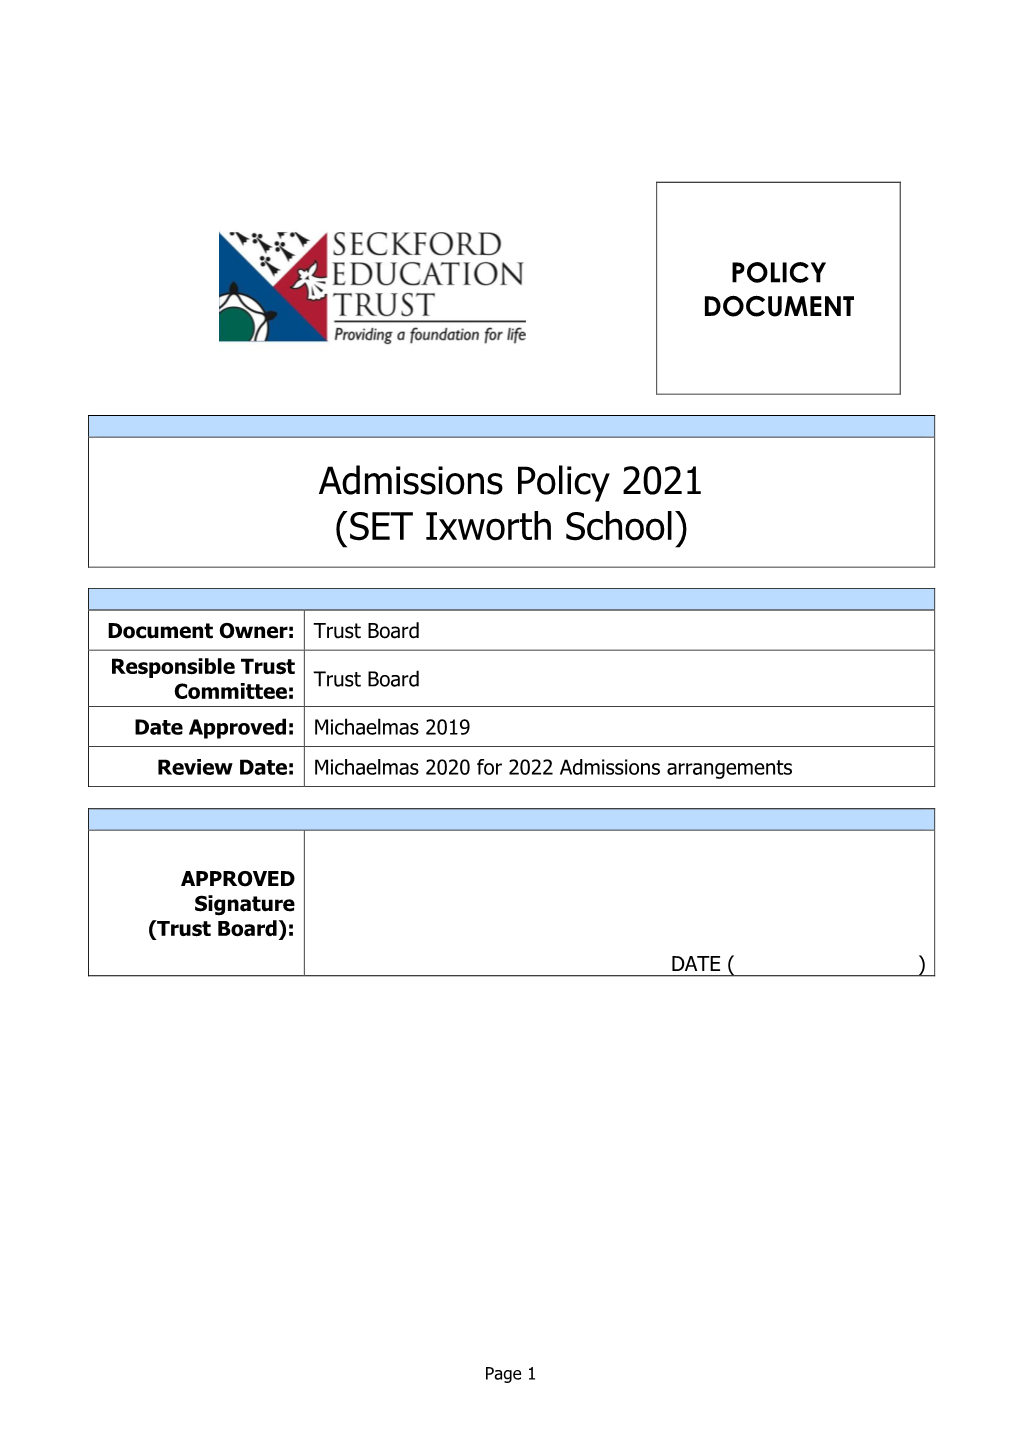 Admissions Policy 2021 (SET Ixworth School)